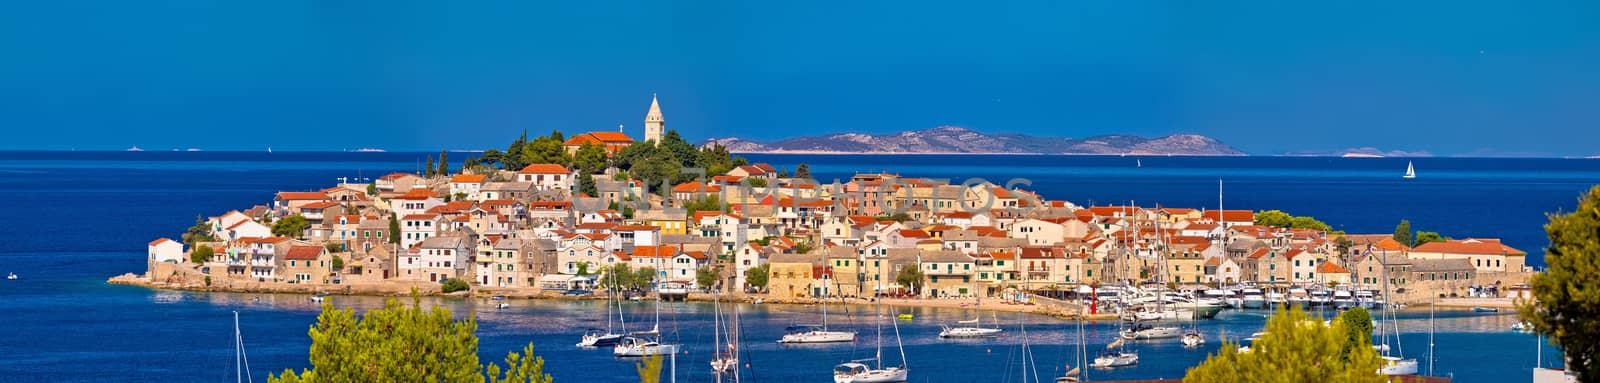 Town of Primosten panoramic view, Dalmatia region of Croatia